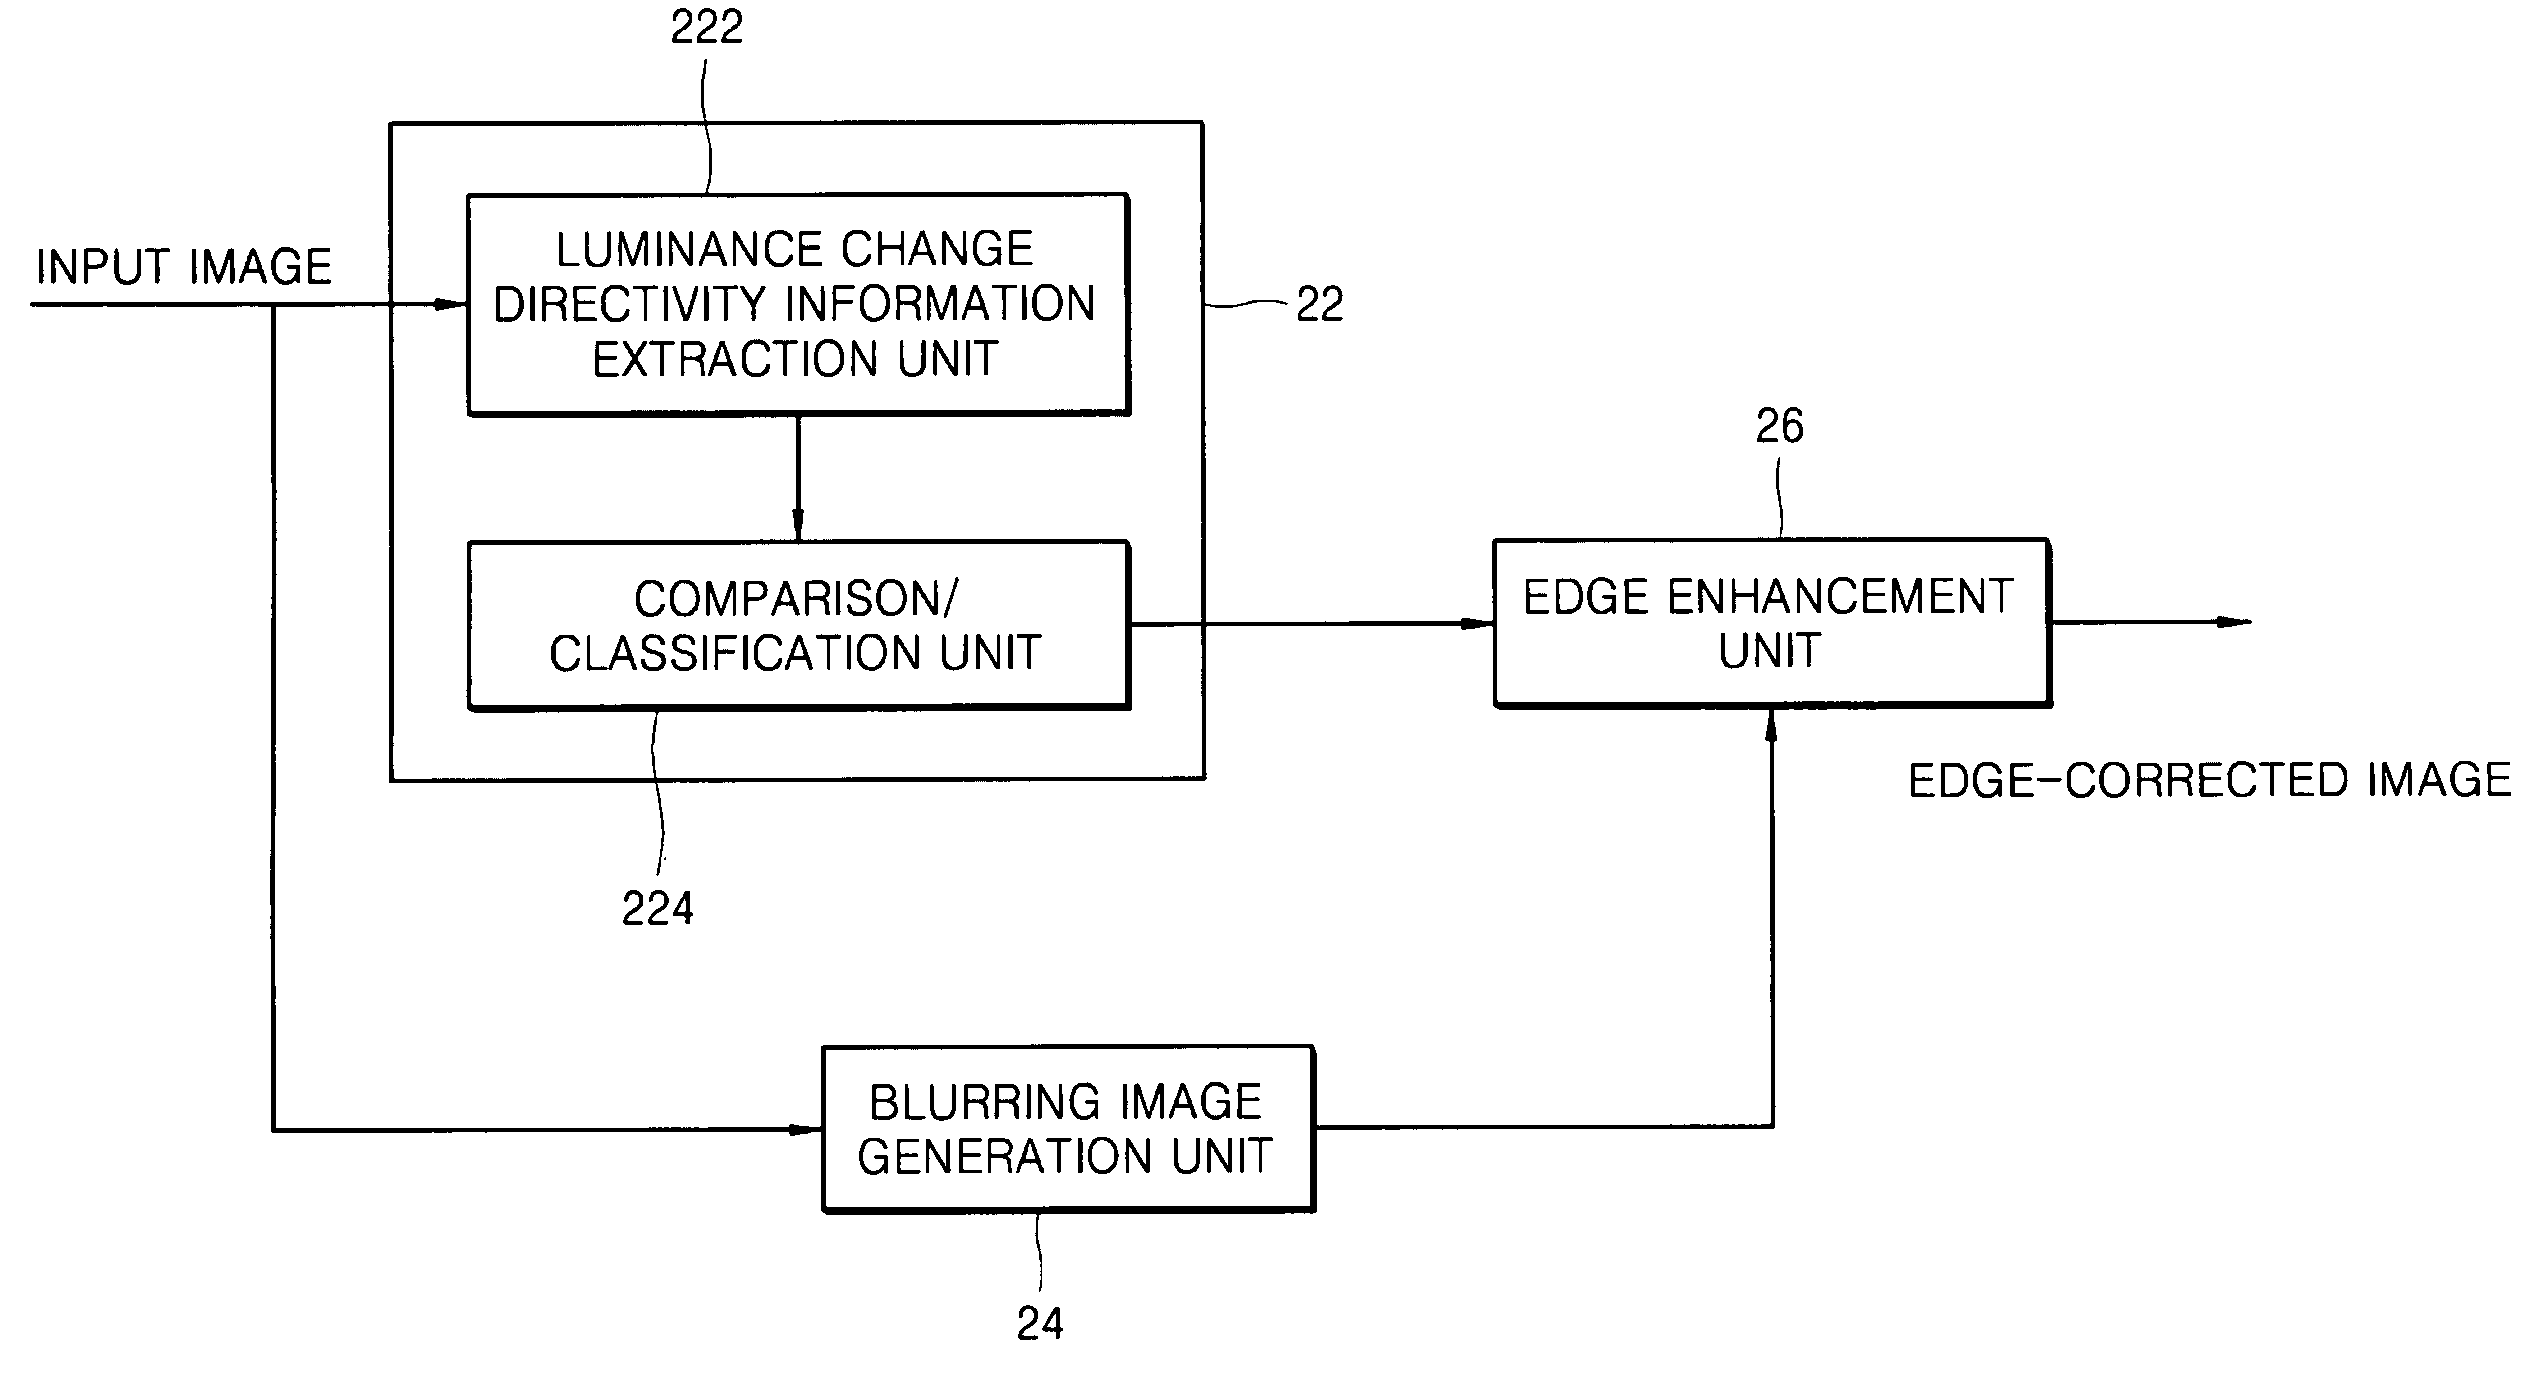 Image edge correction apparatus and method